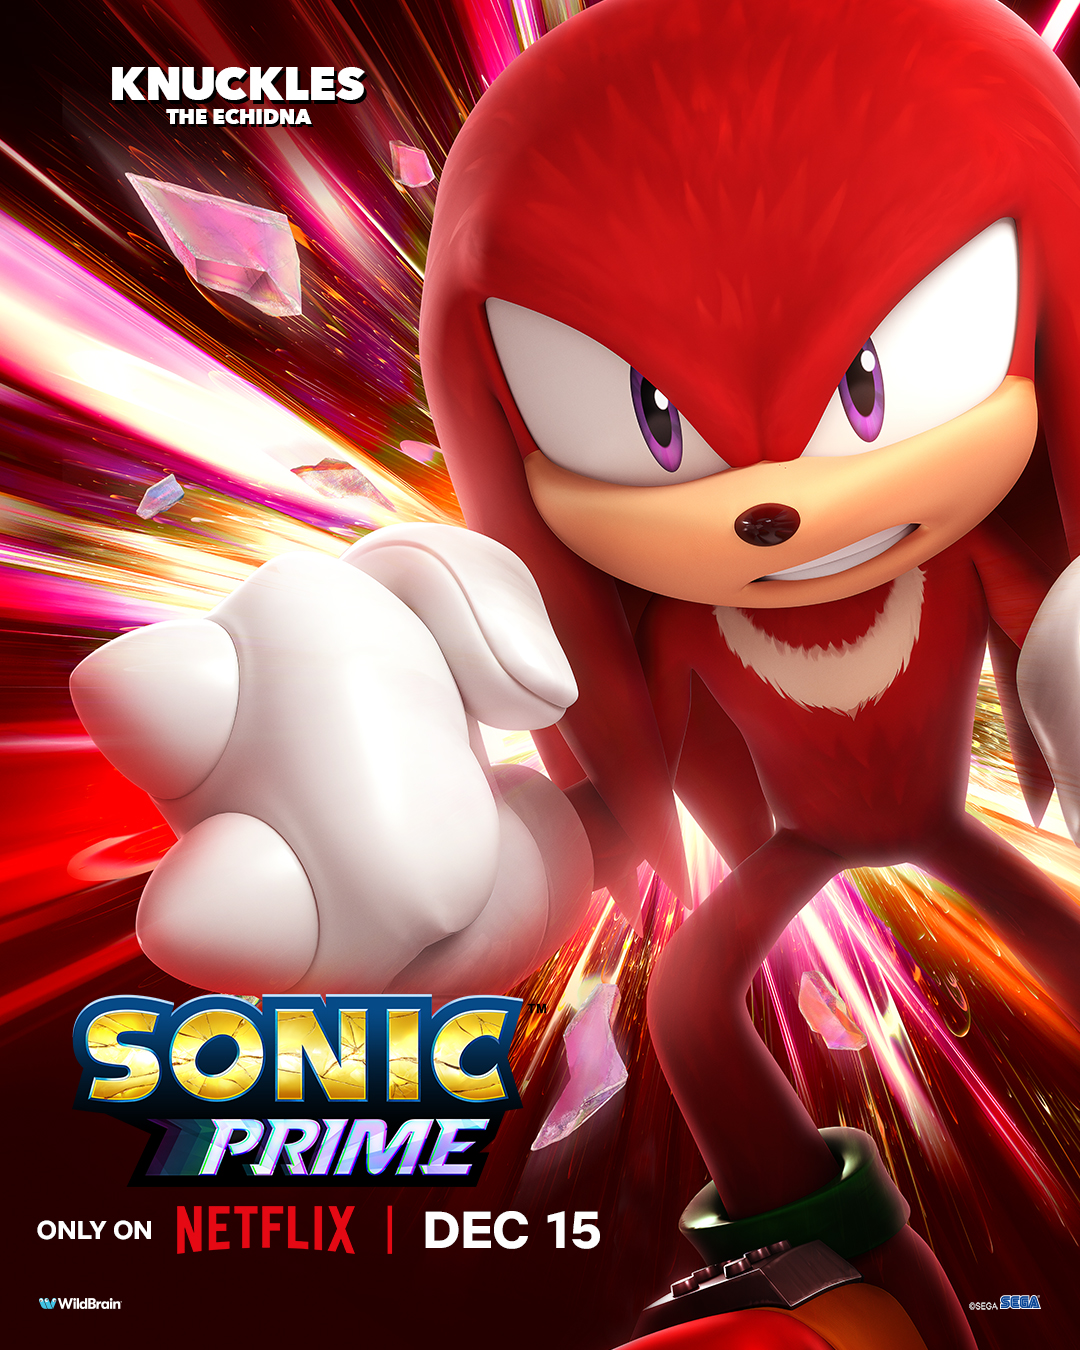 Sonic Prime Season 3 Reveals New Preview Clip - Noisy Pixel